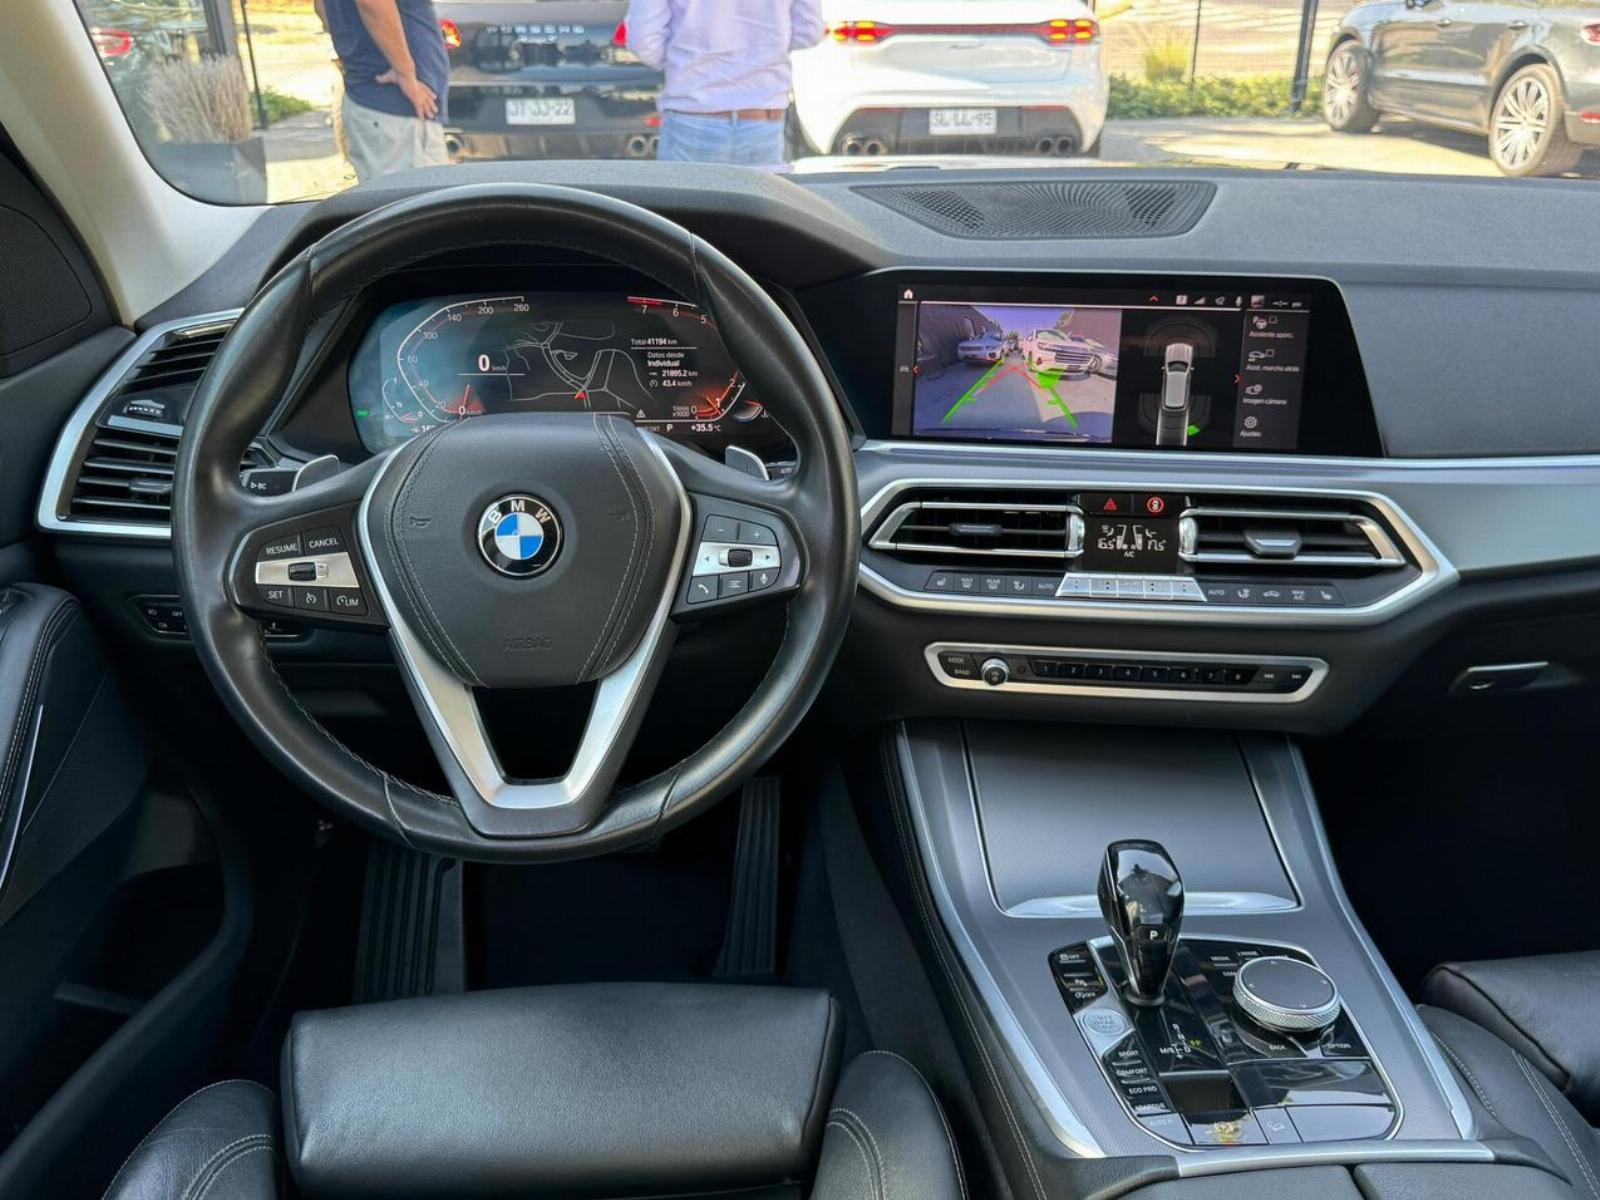 BMW X5 40i EXECUTIVE 2020 MANTENIMIENTO EN WBM - FULL MOTOR